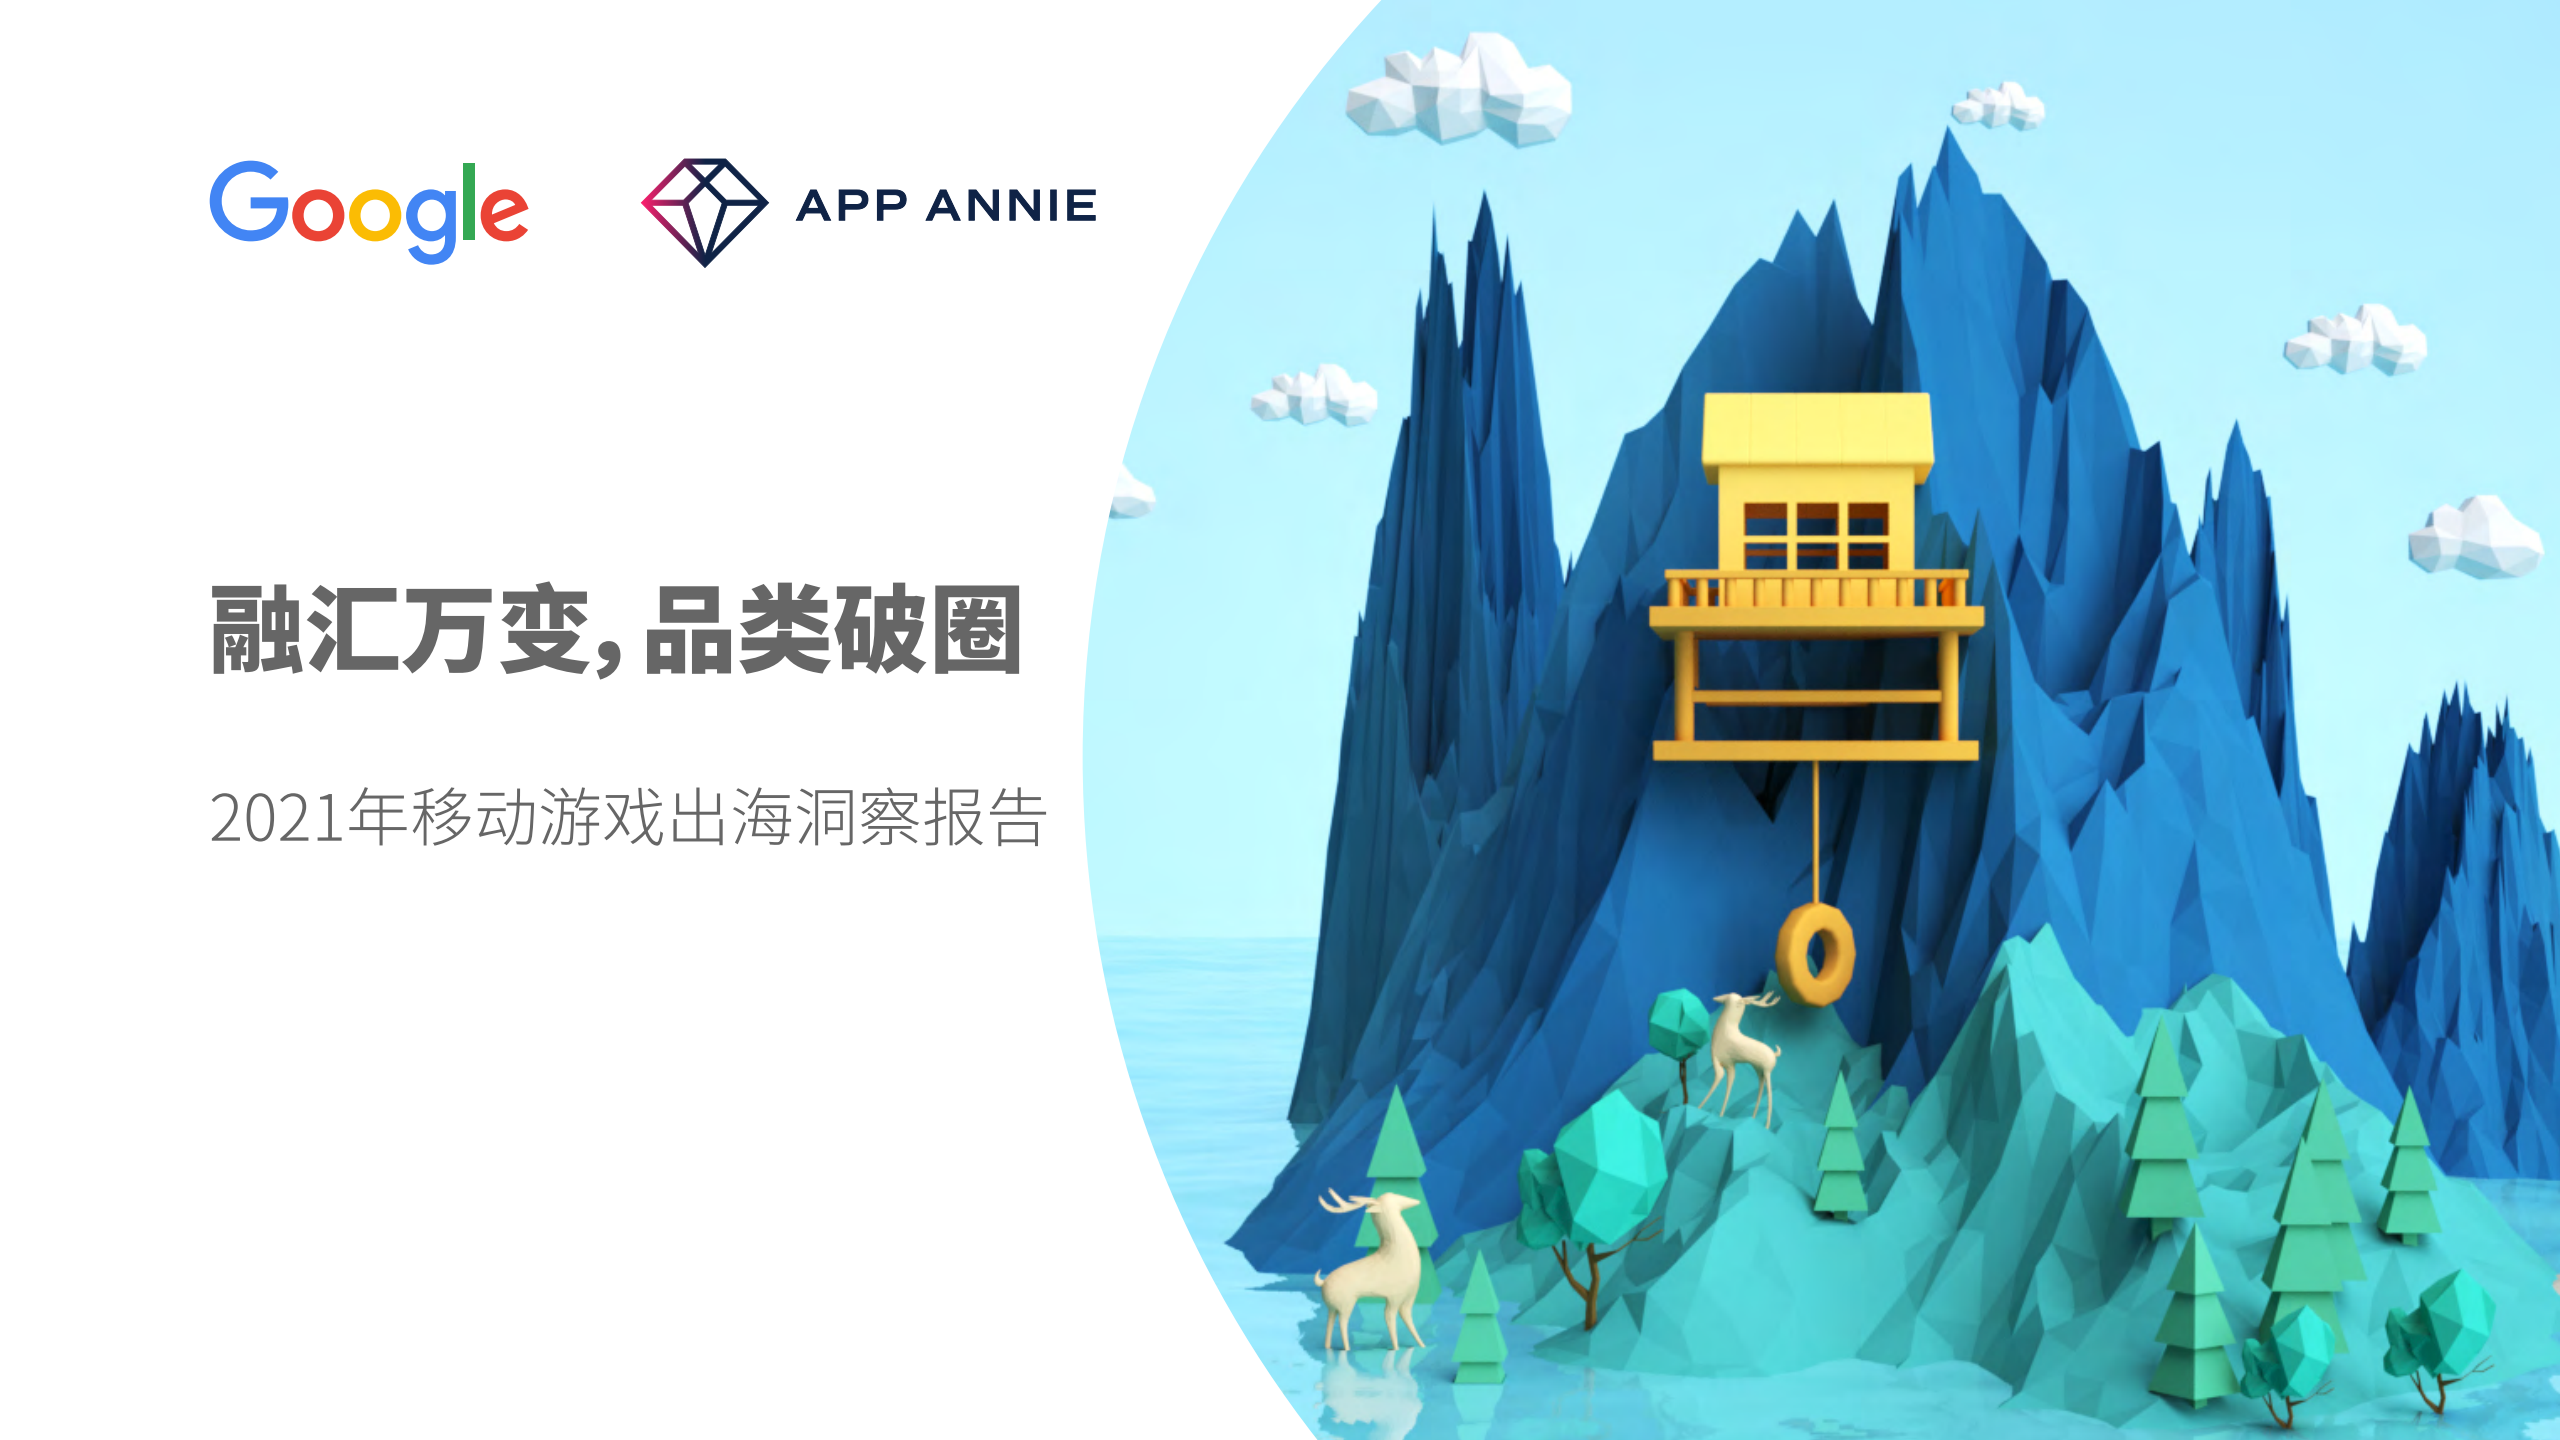 App Annie&Google：2021年移动游戏出海洞察报告